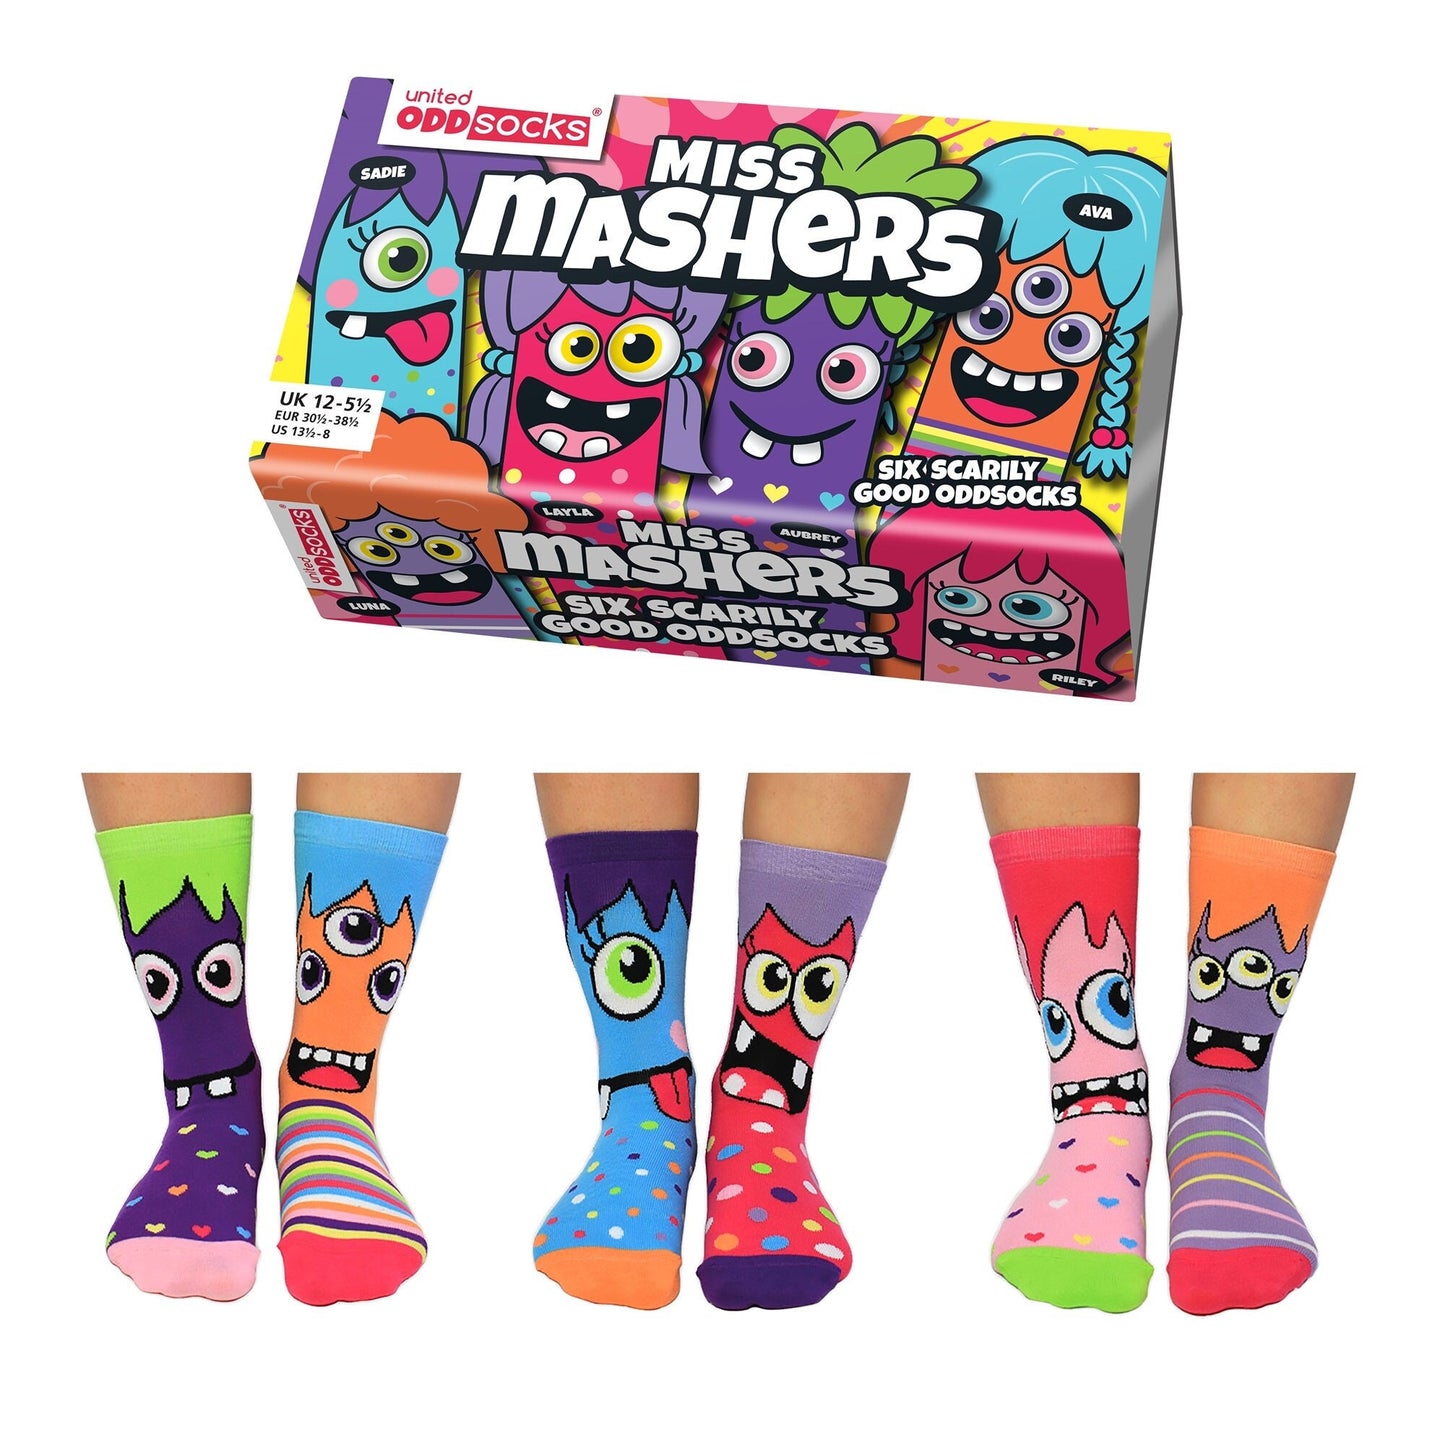 United Oddsocks Miss Mashers UK Size 12-5.5 Set Of 6 Girls Socks